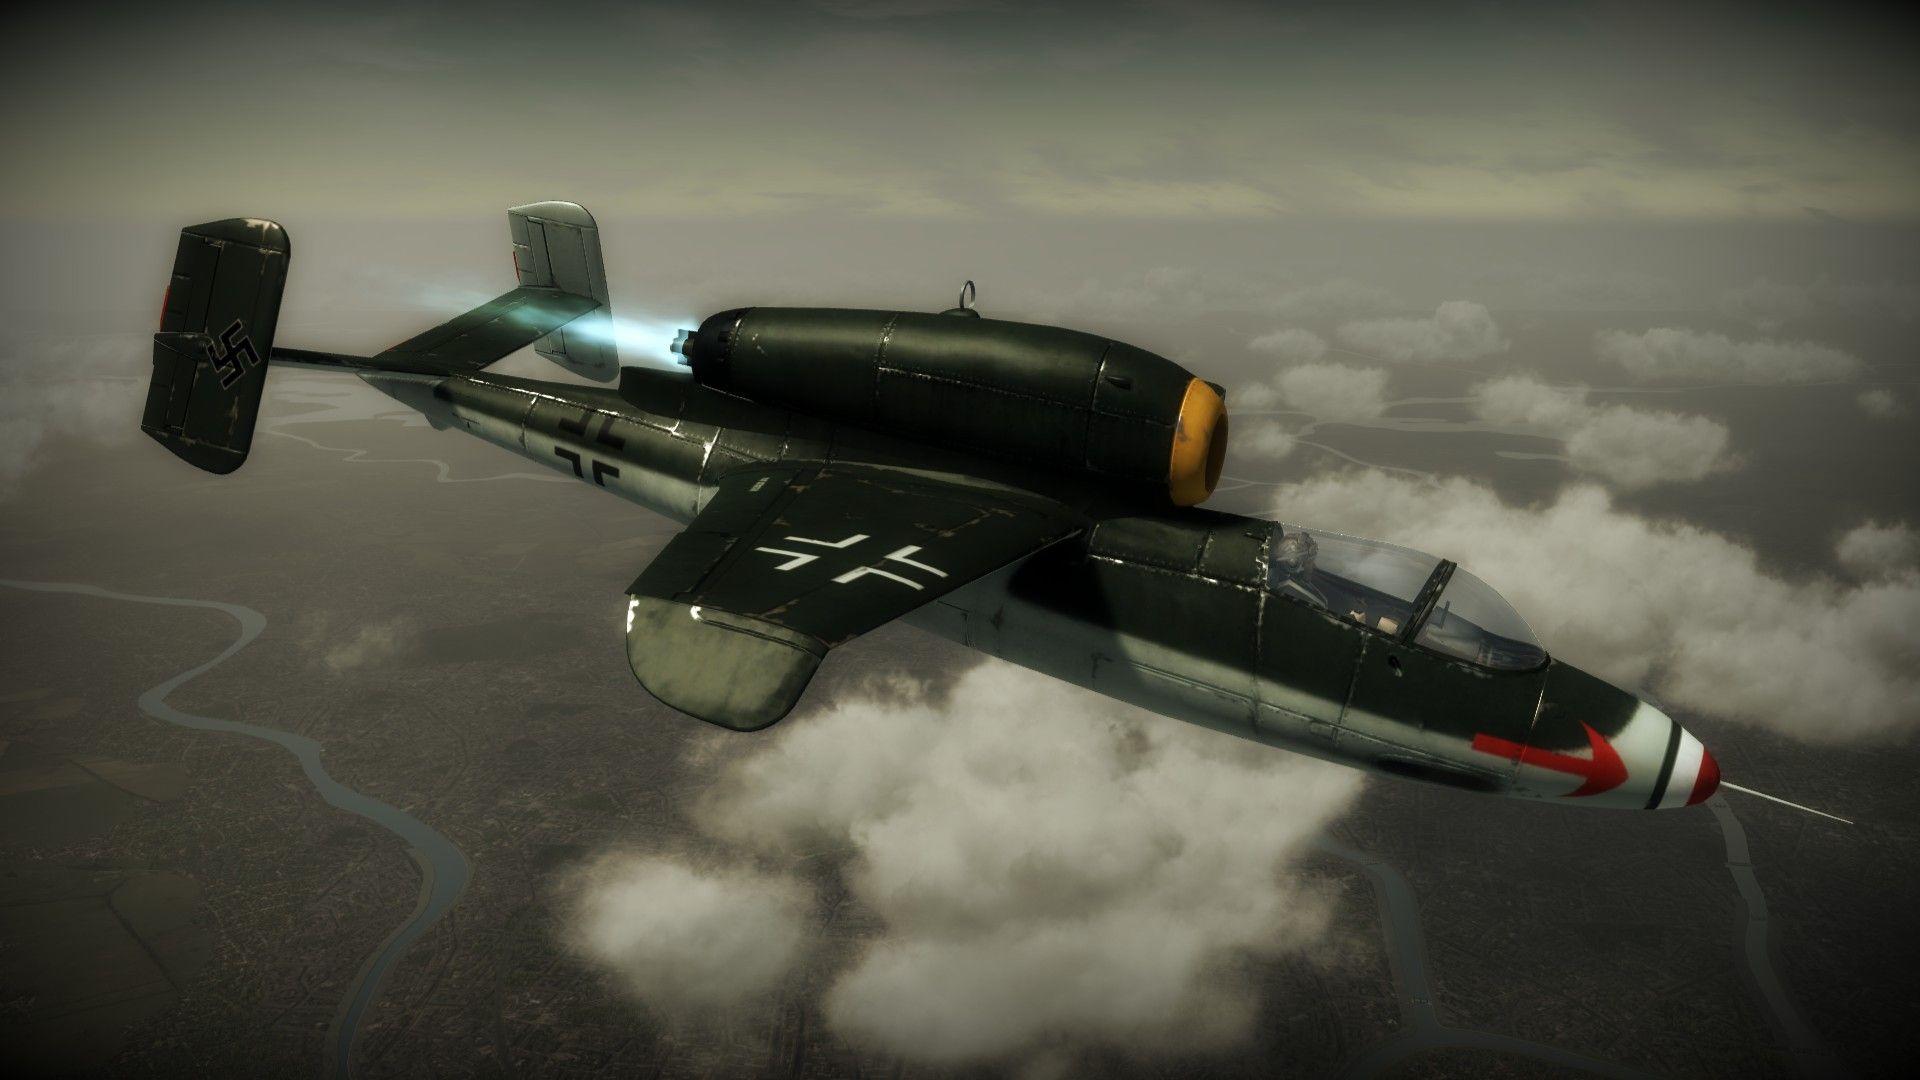 Plane Wallpaper, War Planes, Sky, Wings, HD Airplane Image, Free